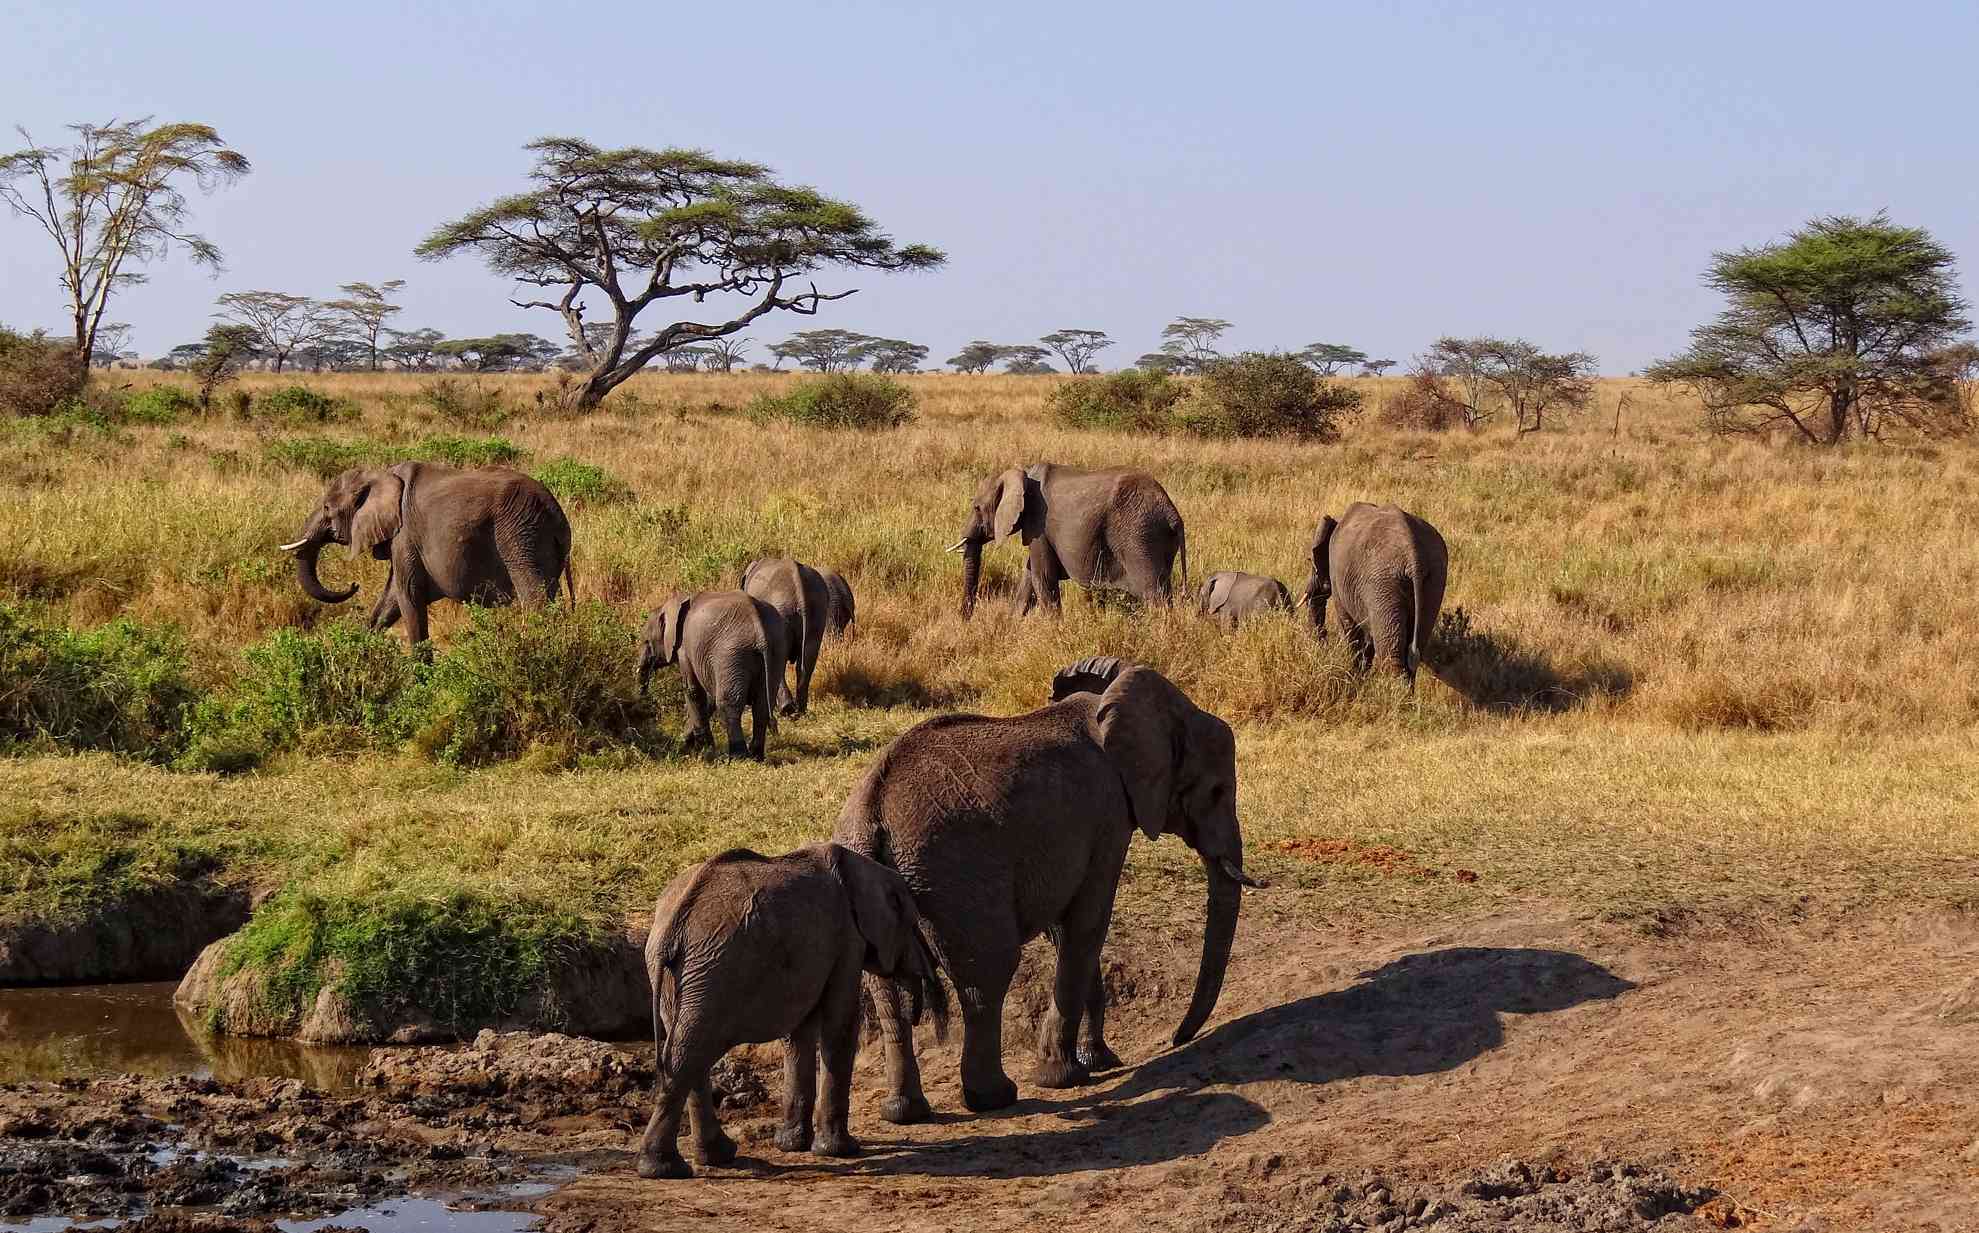  A herd of elephants in Serengeti National Park, Tanzania.